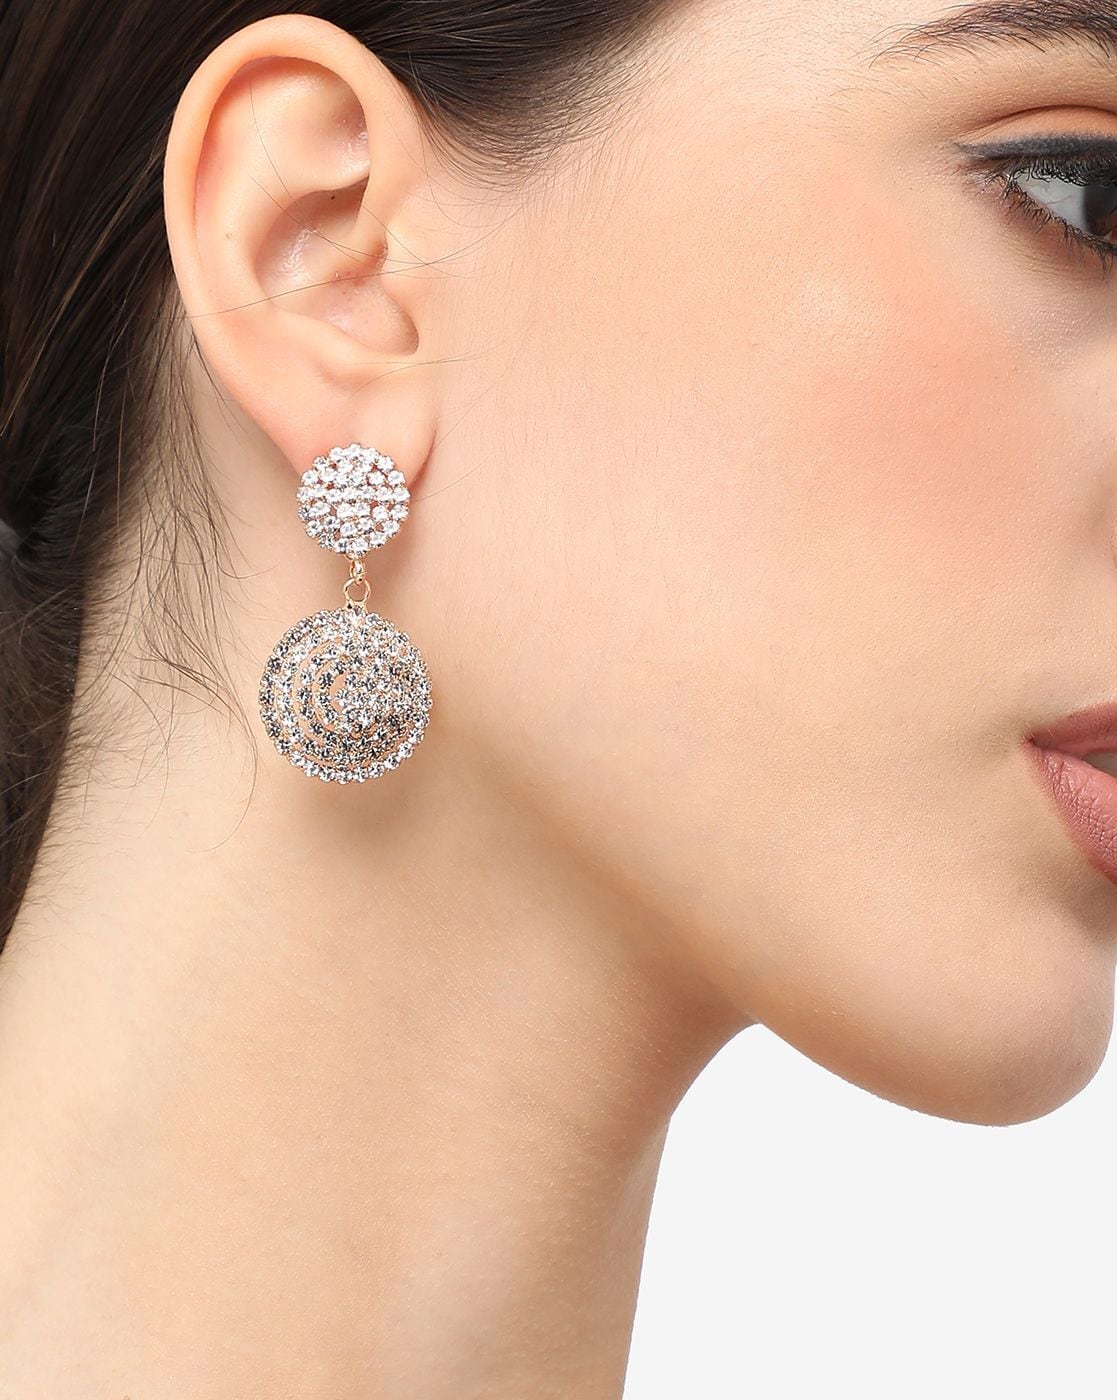 Hypoallergenic 925 Sterling Silver Classy Disco Ball Beads Crystal Drop  Earrings | eBay